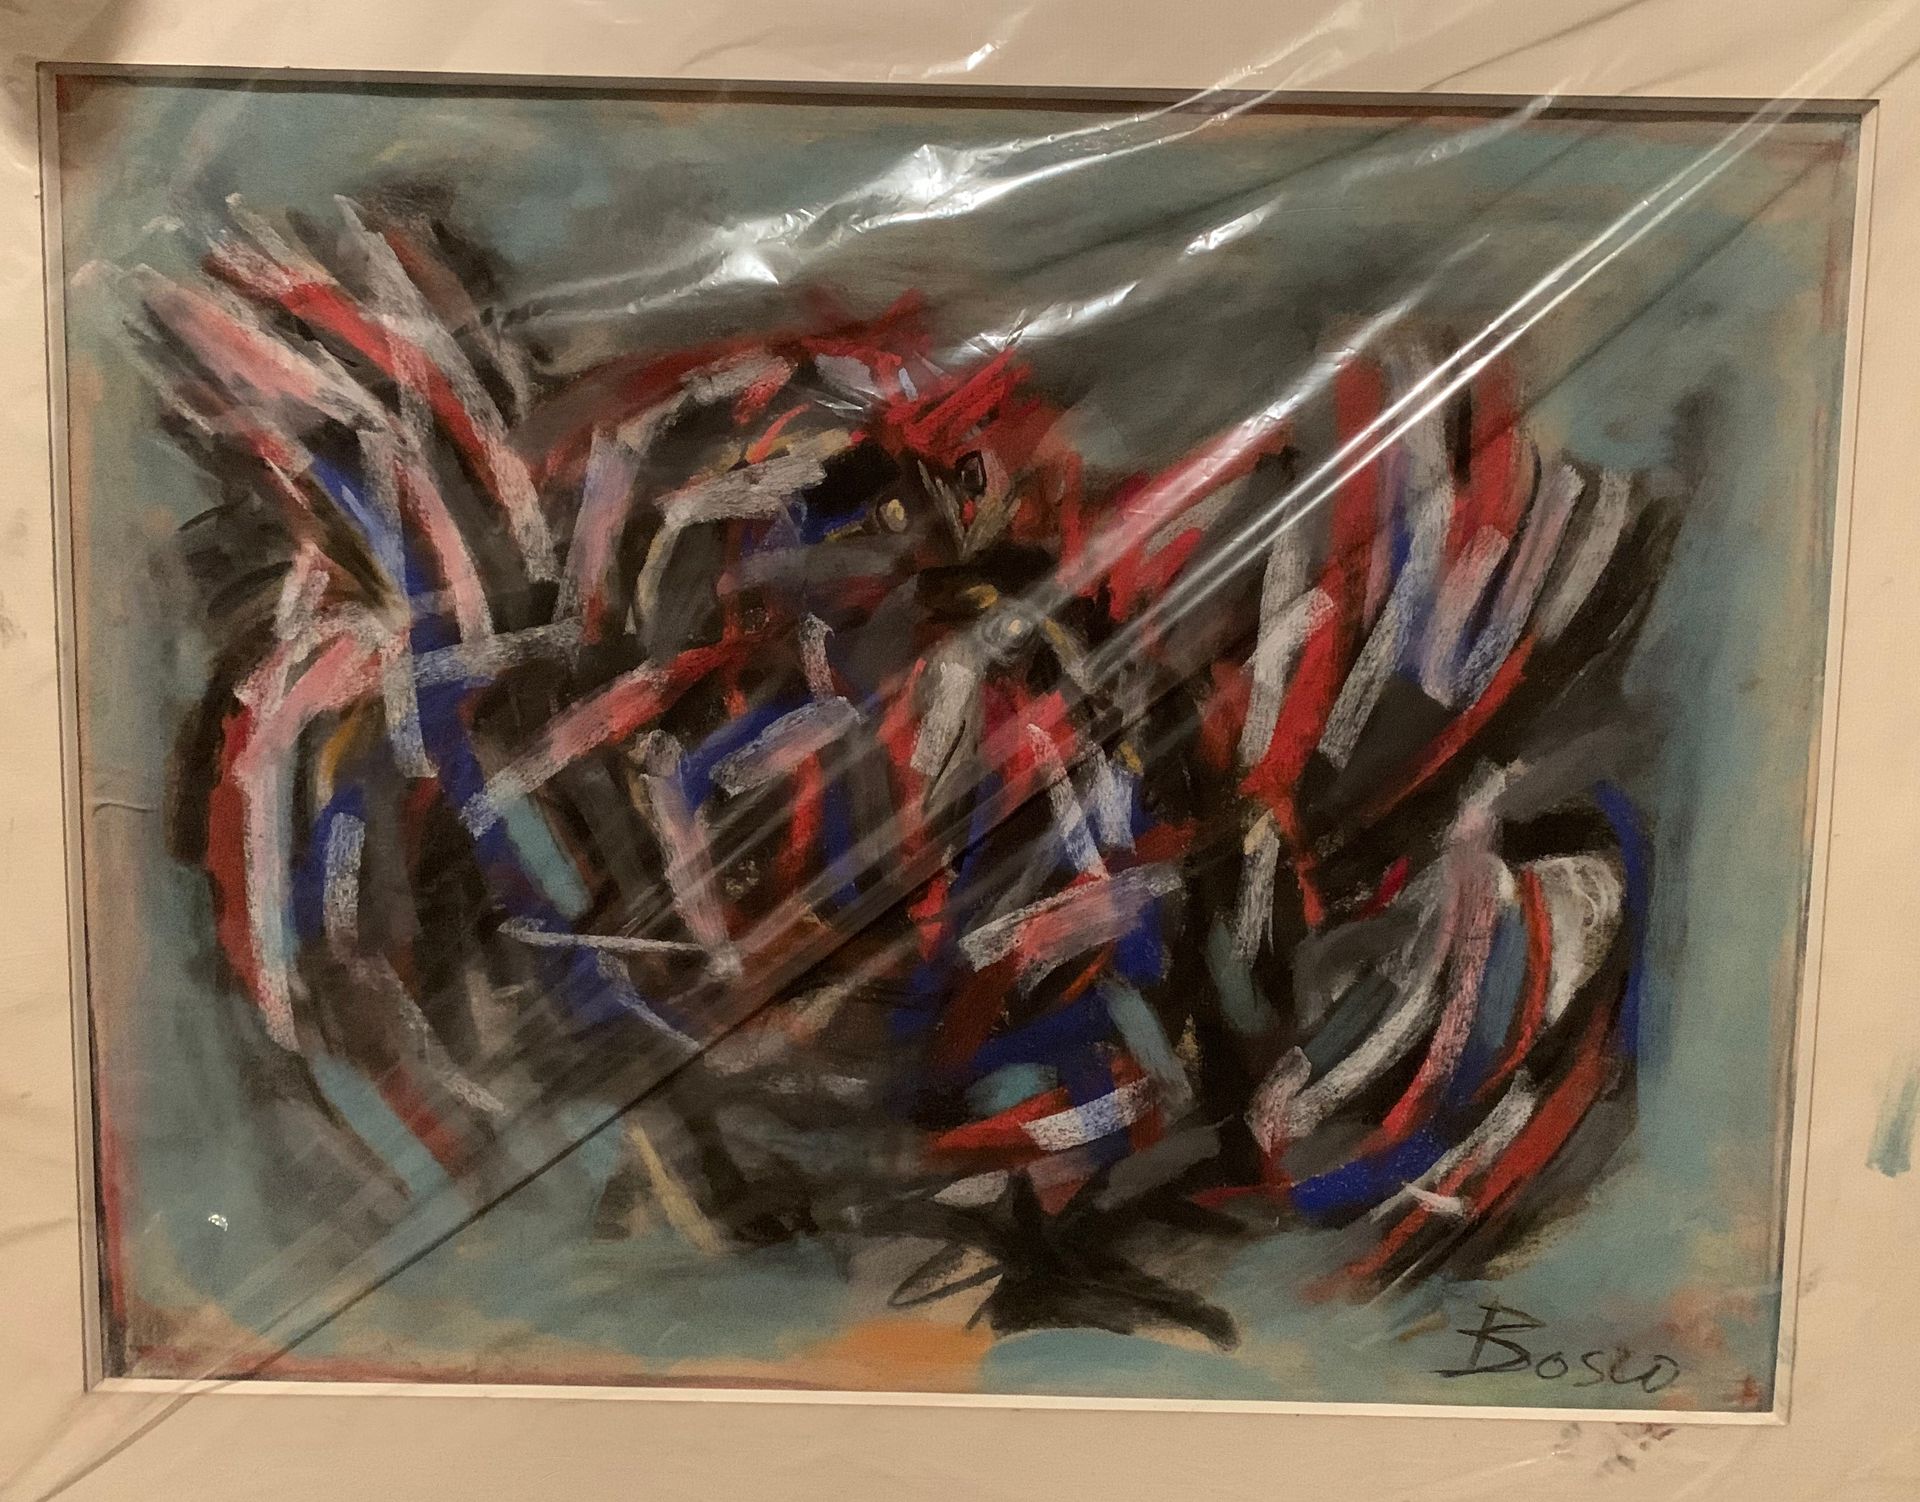 Null 皮埃尔-博斯克 (1909-1993)

无题

右下角有签名的粉彩画

42 x 55厘米